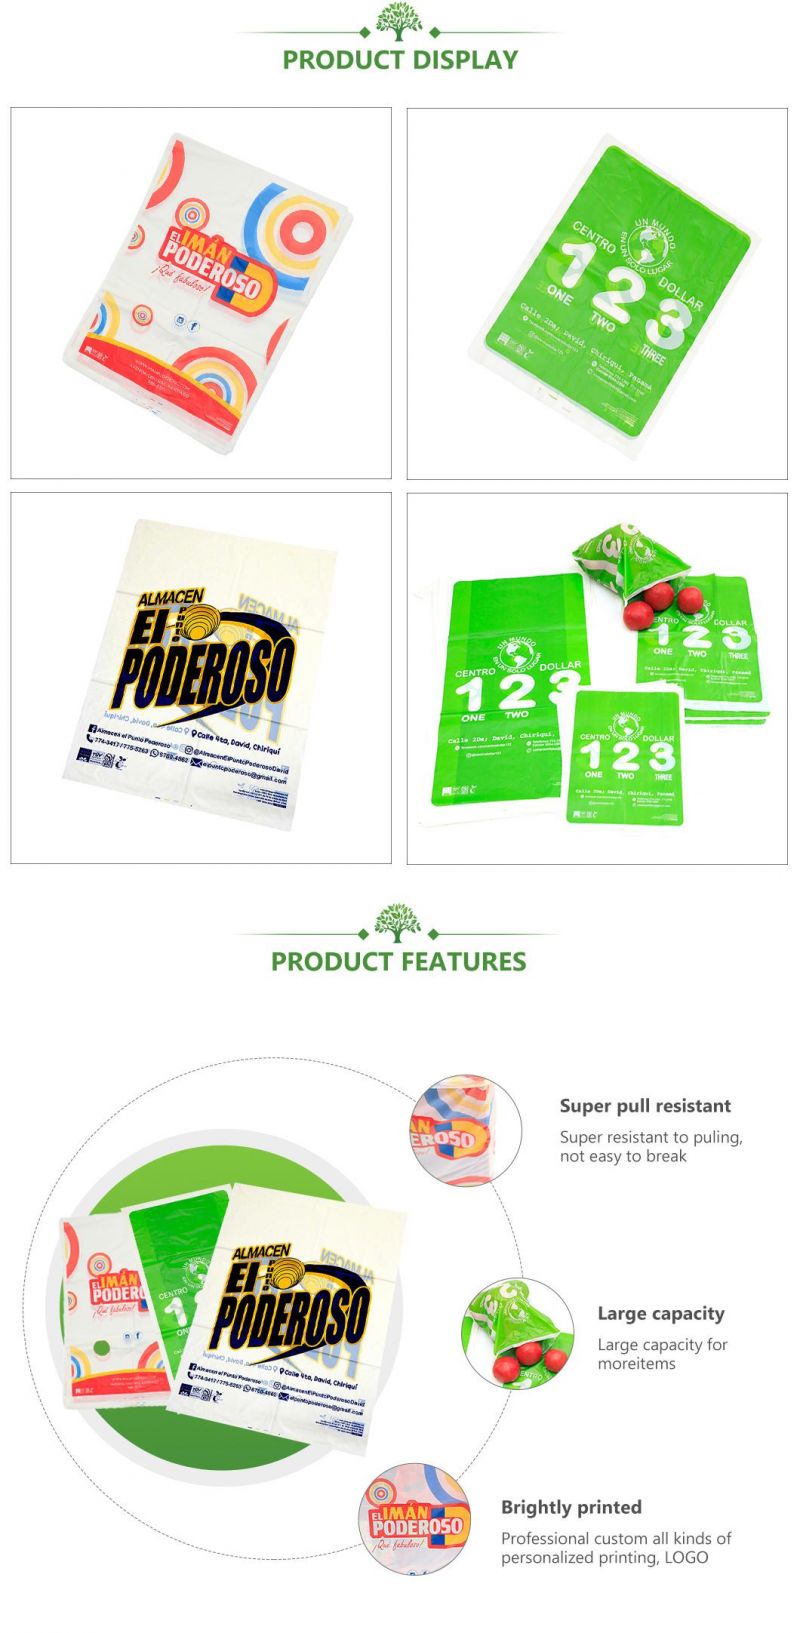 PLA+Pbat/Pbat+Corn Starch Biodegradable Bags, Compostable Bags, Vegetable Bags for Indoor